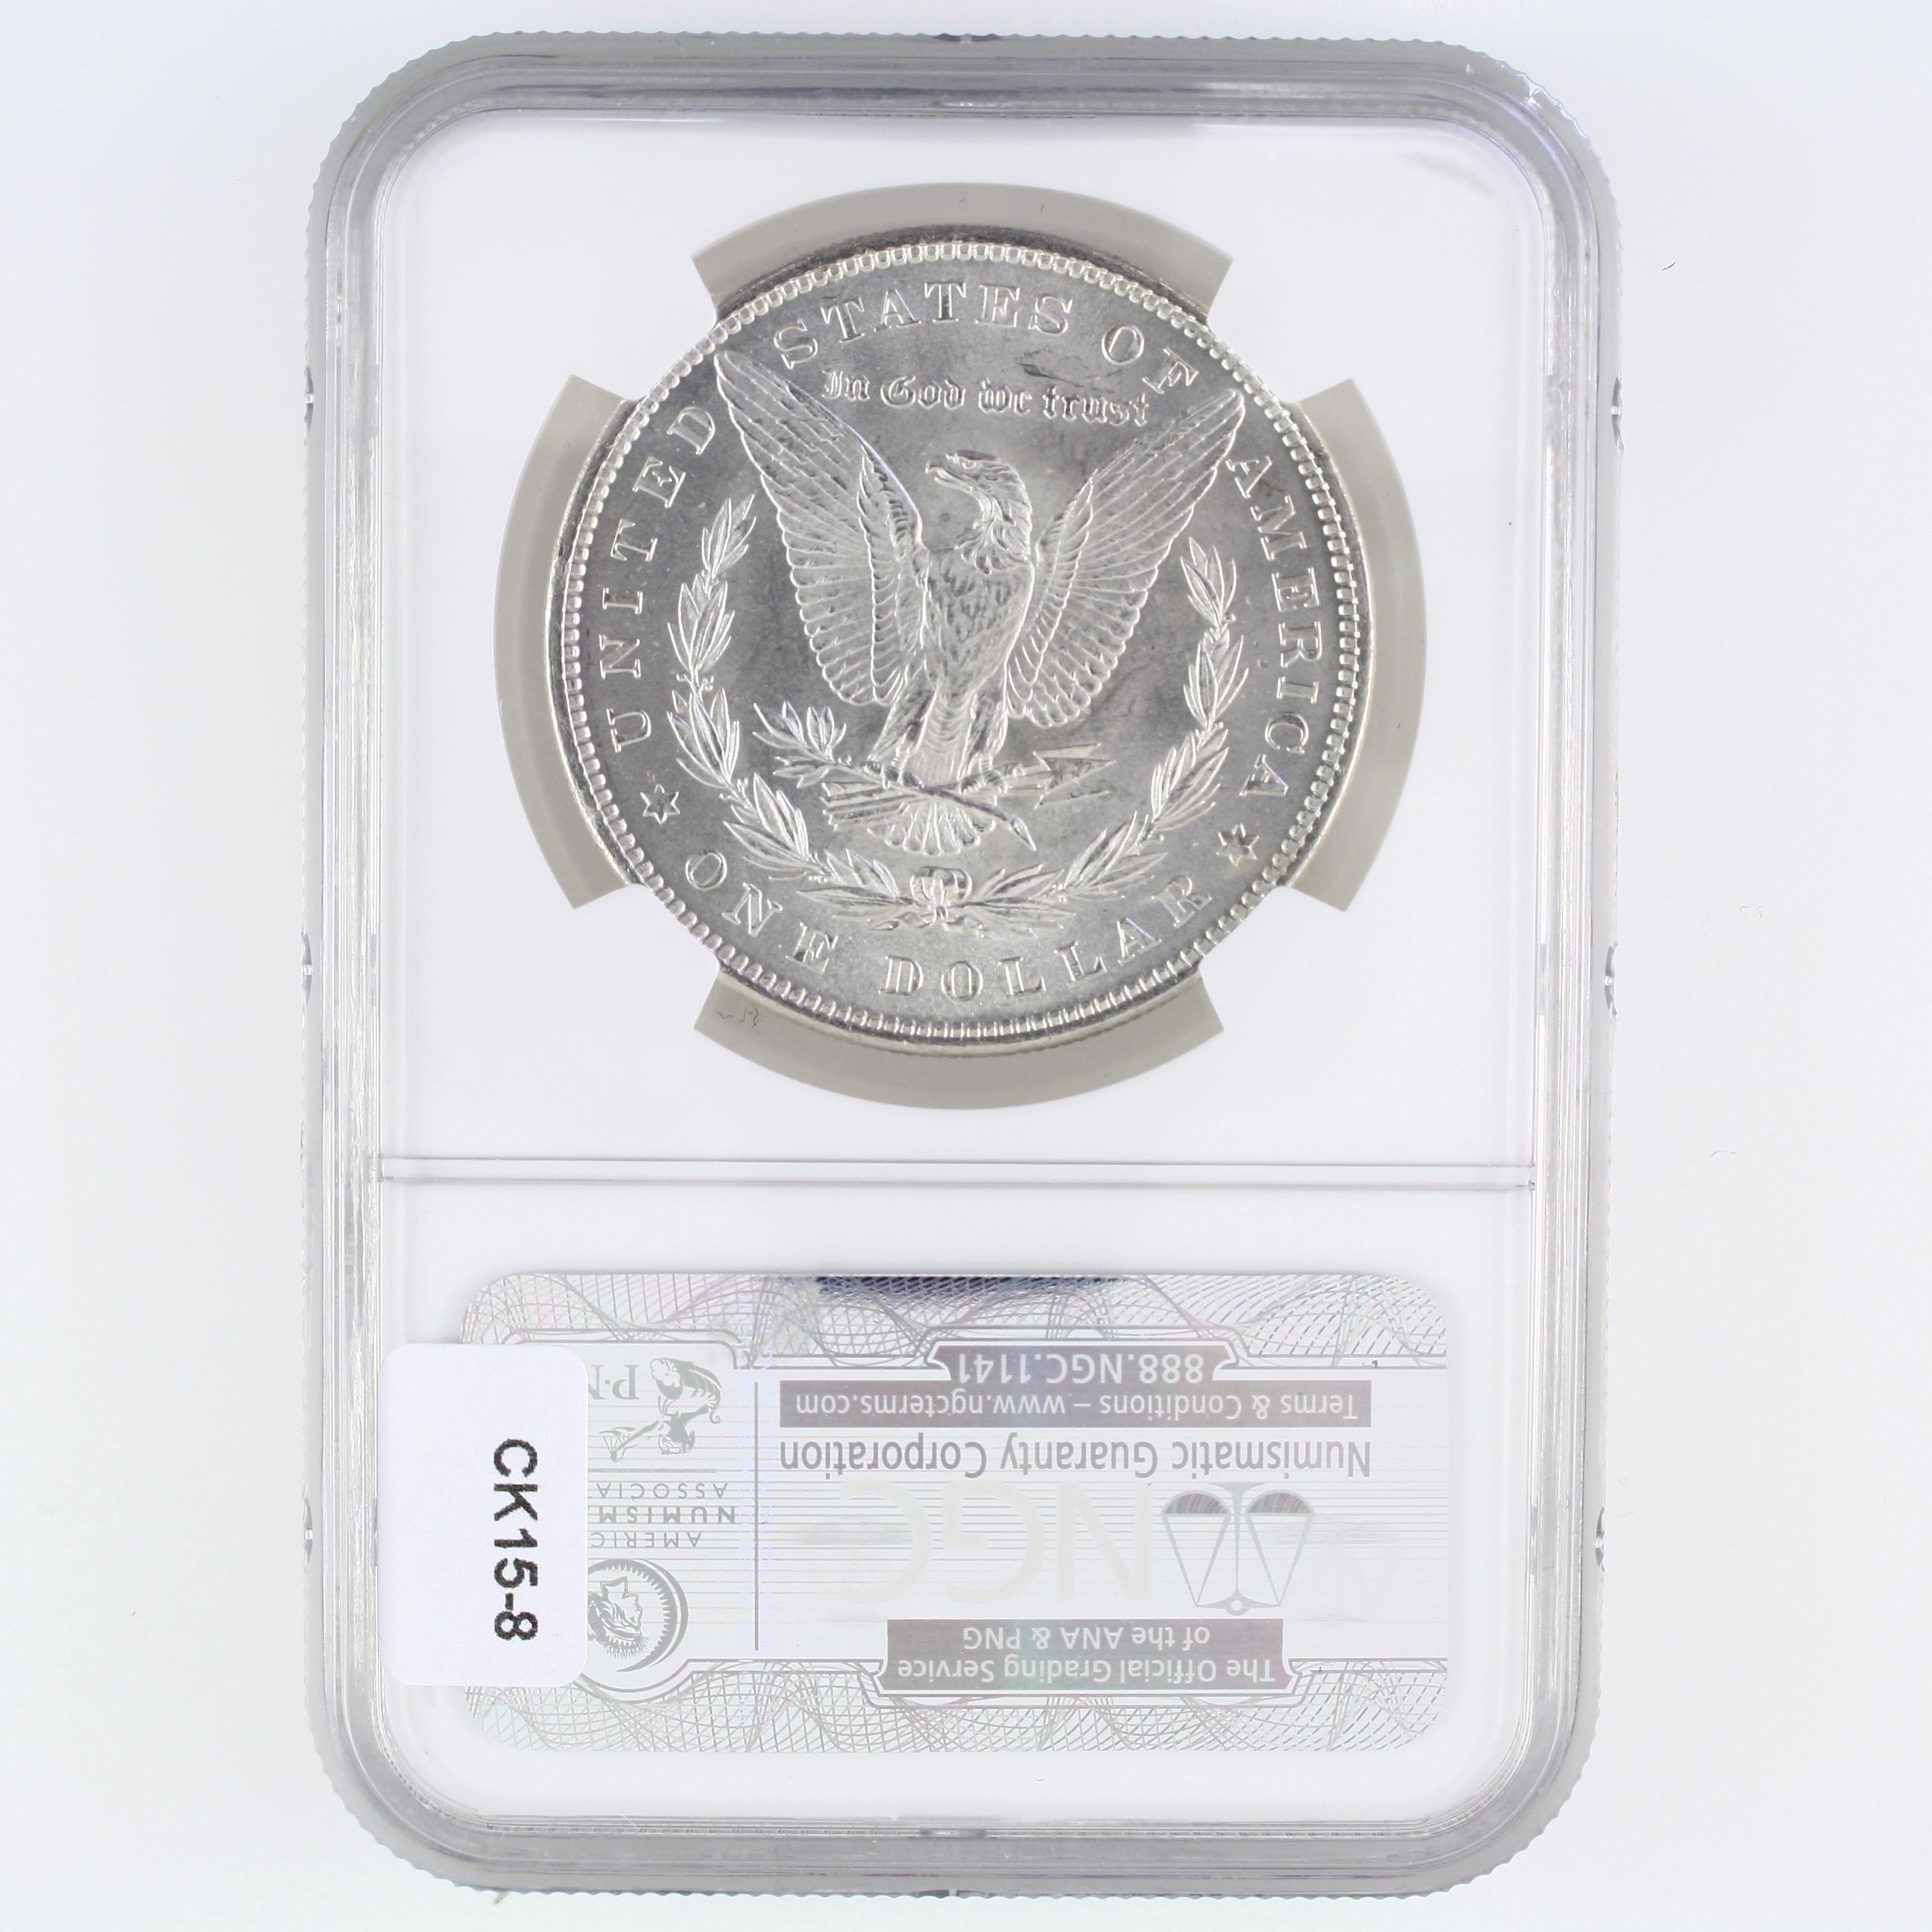 Certified 1880 U.S. Morgan silver dollar